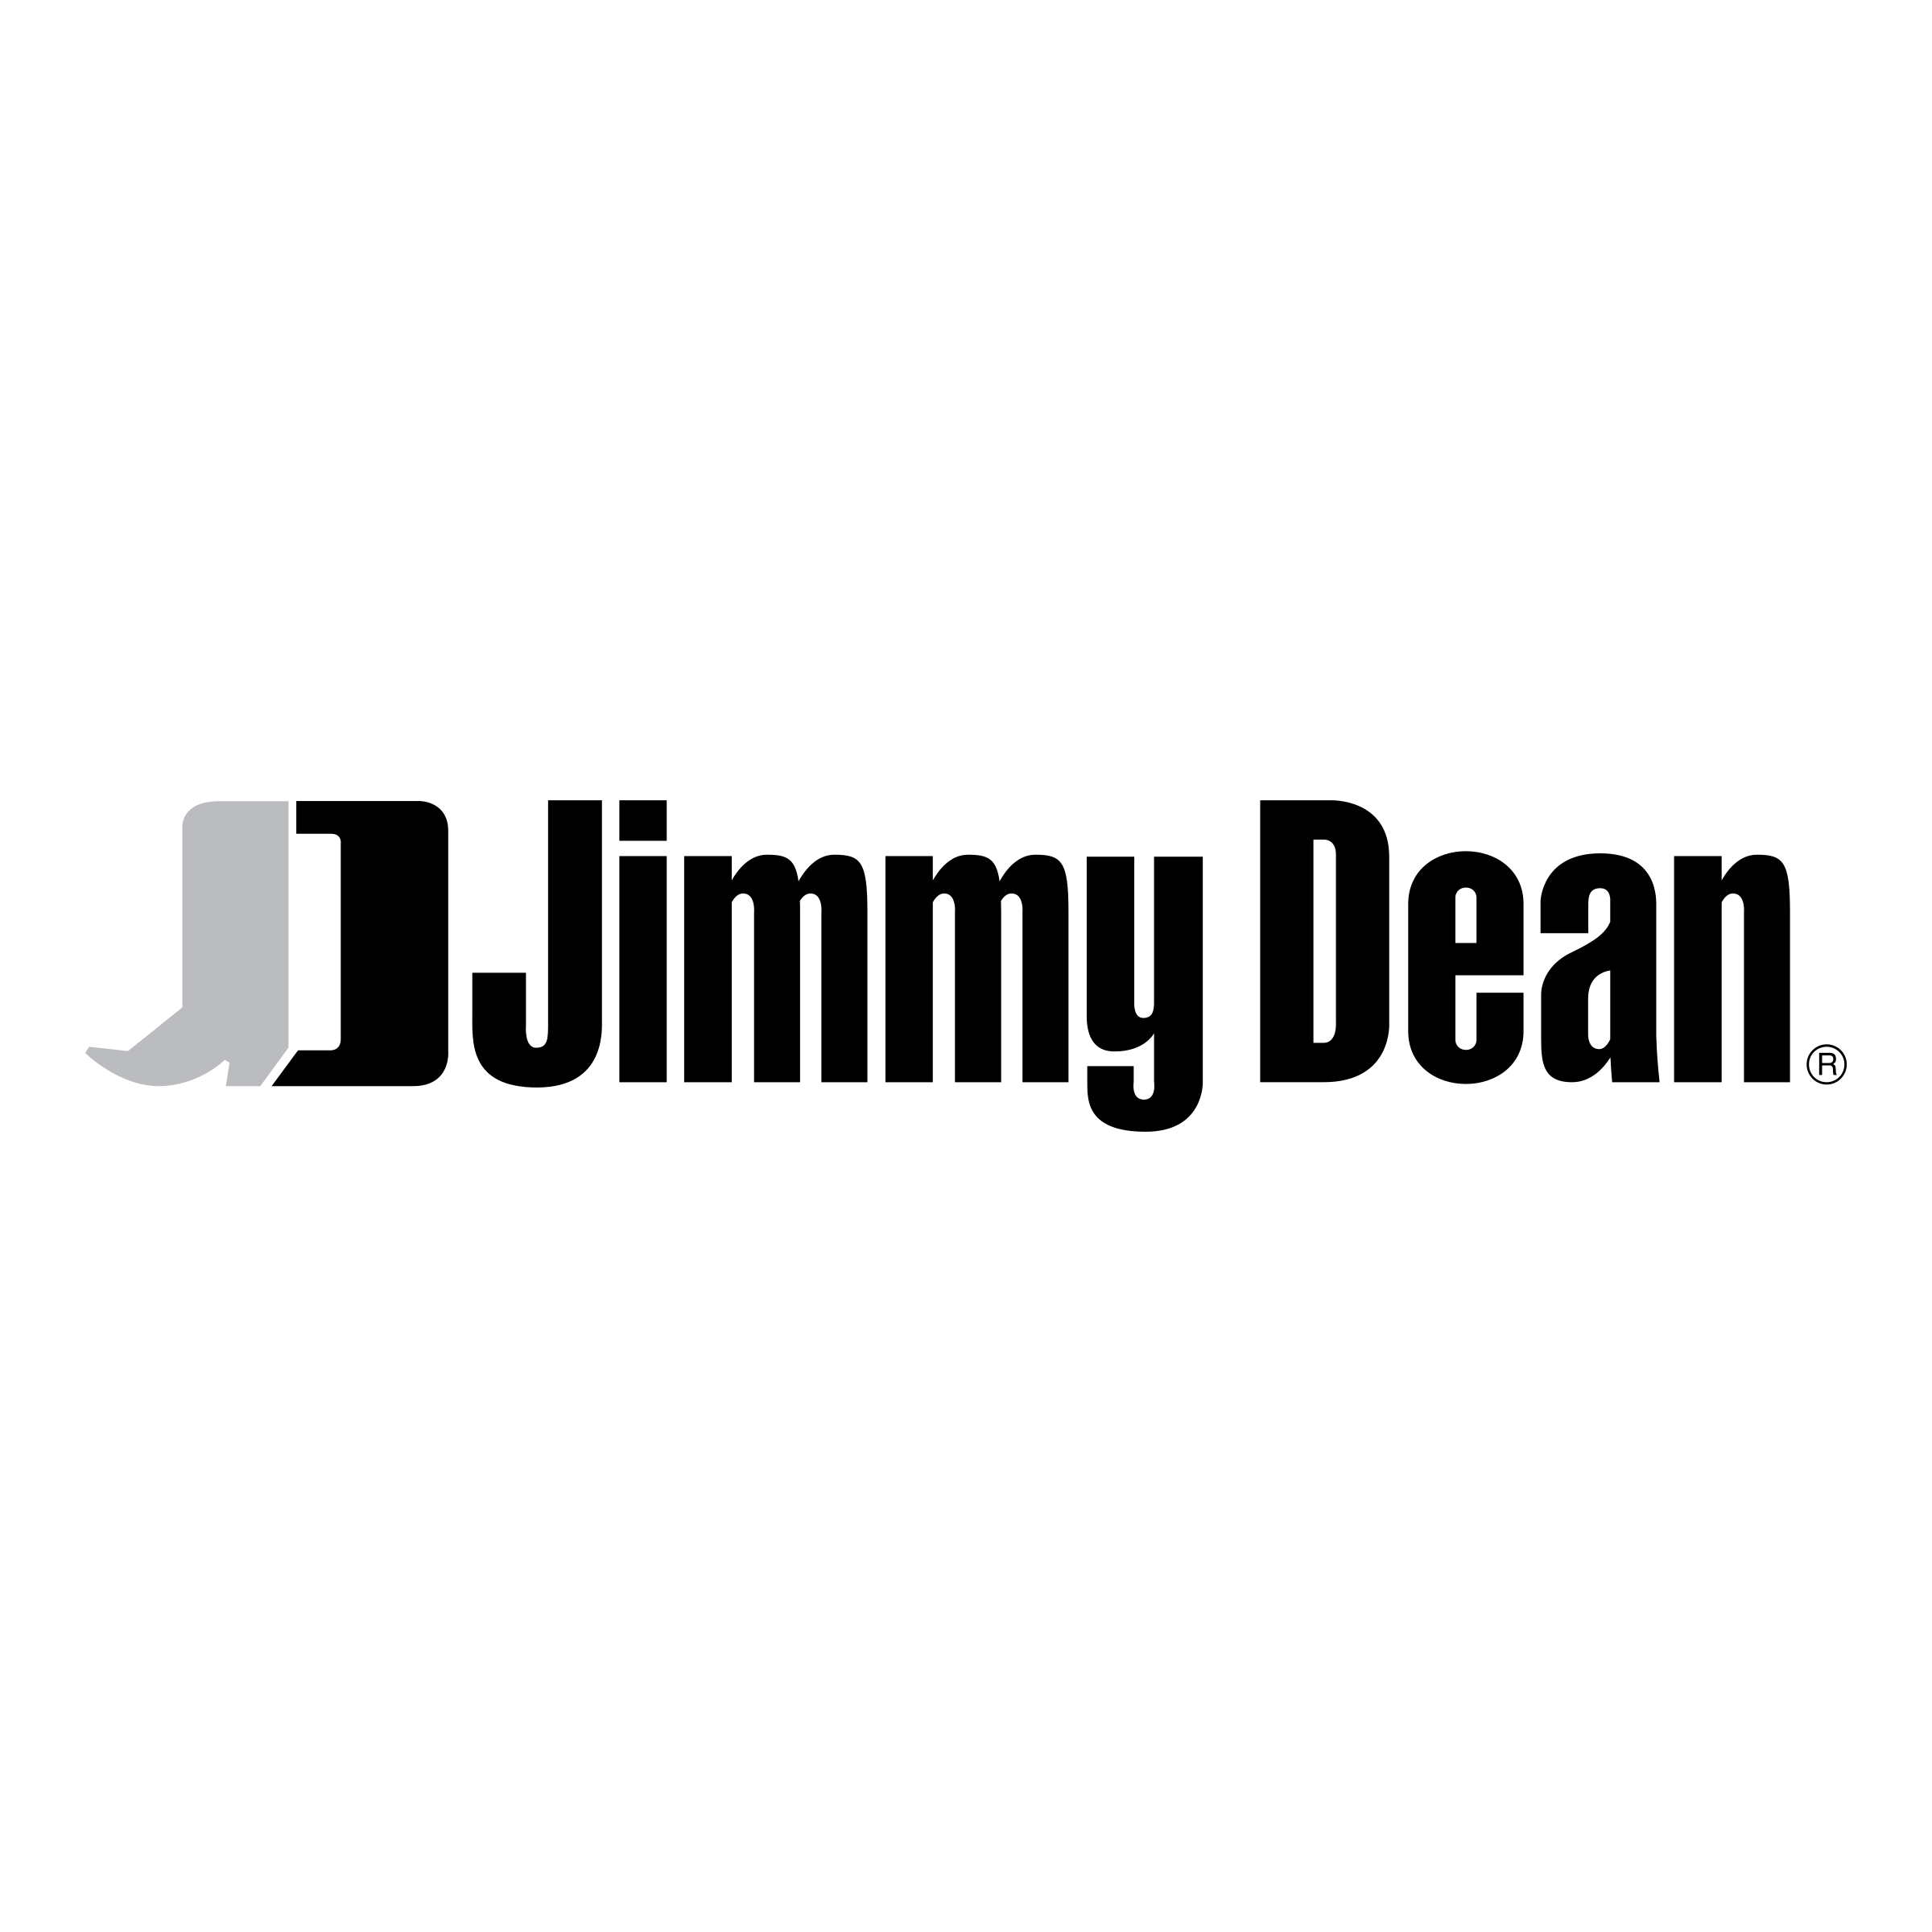 Dean Logo - Jimmy Dean Logo PNG Transparent & SVG Vector